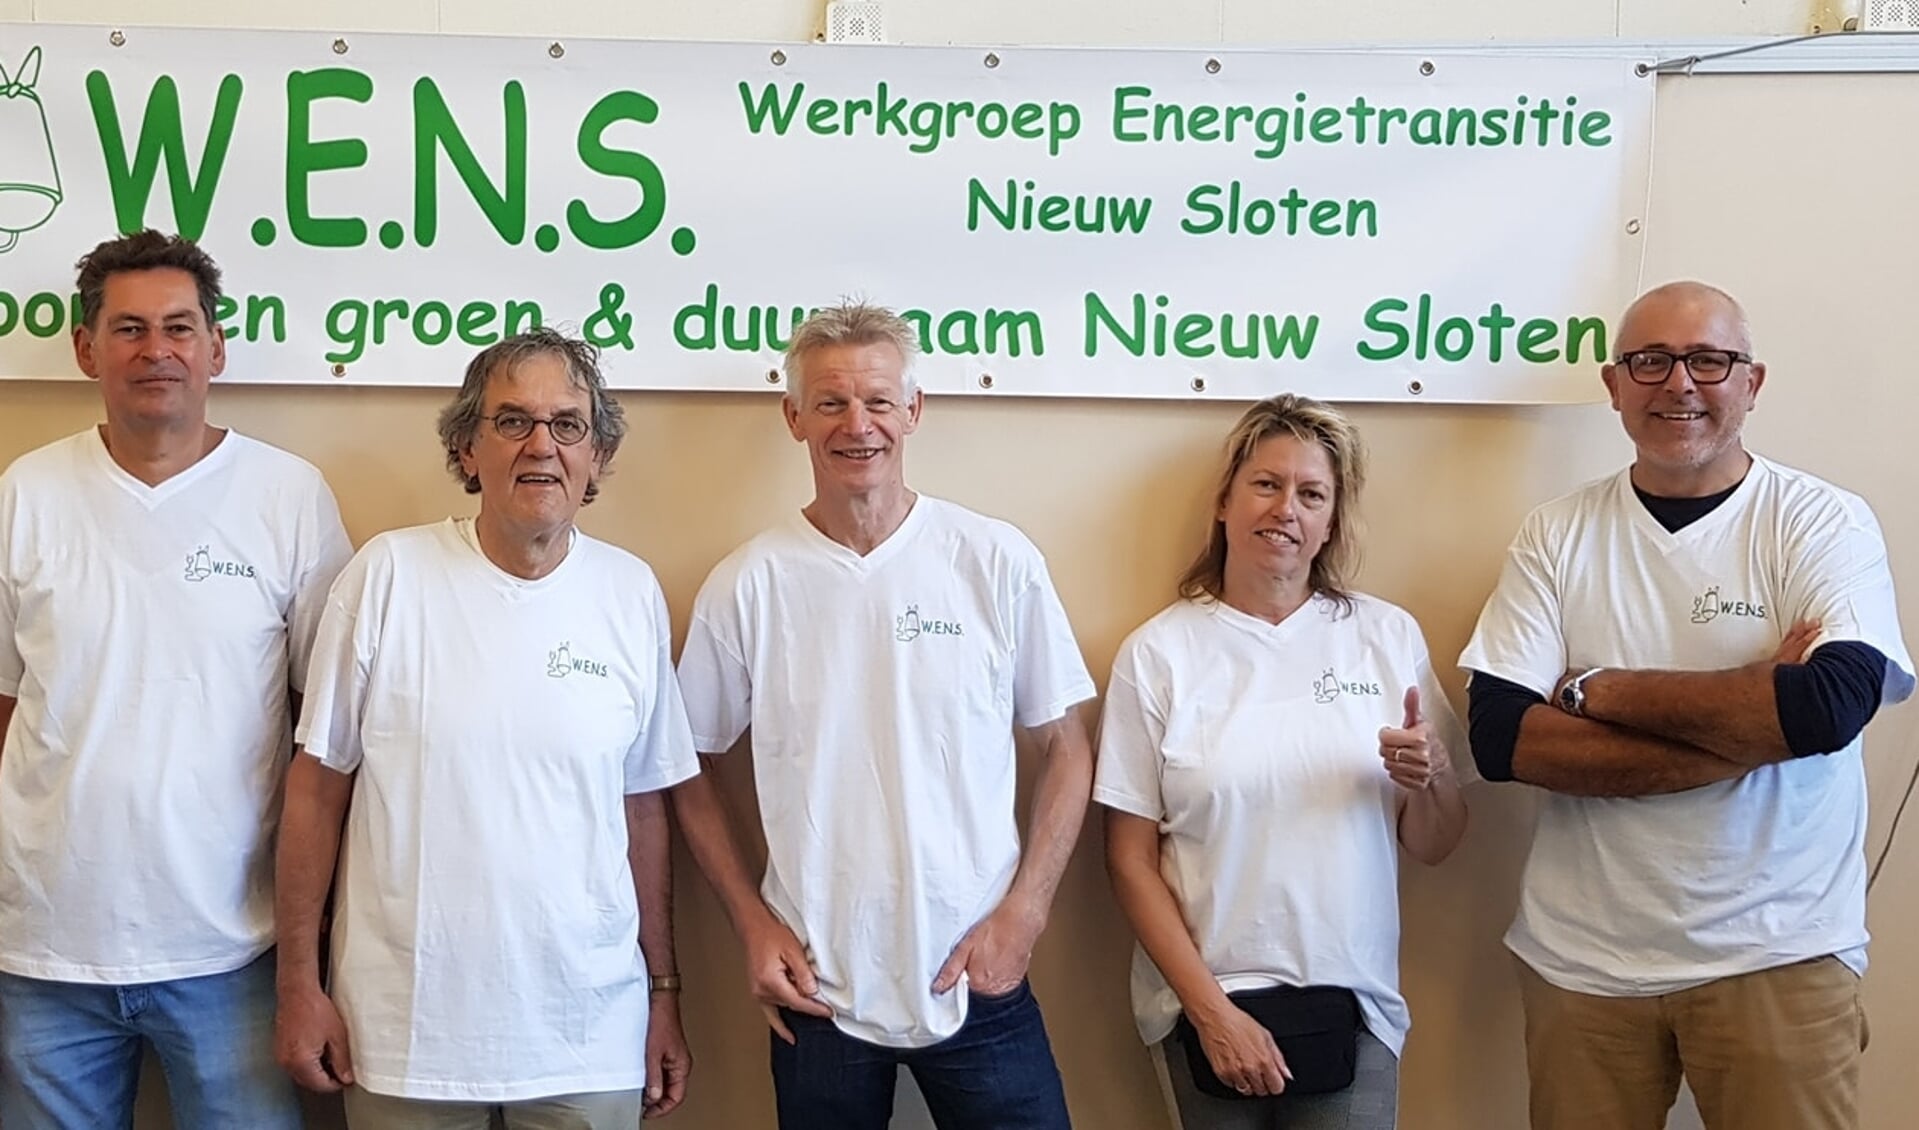 De leden van W.E.N.S. vlnr: Nico Beumer, Frans Peters, Rene Goossens, Alina Sijthoff en Hans Roeland Poolman. 